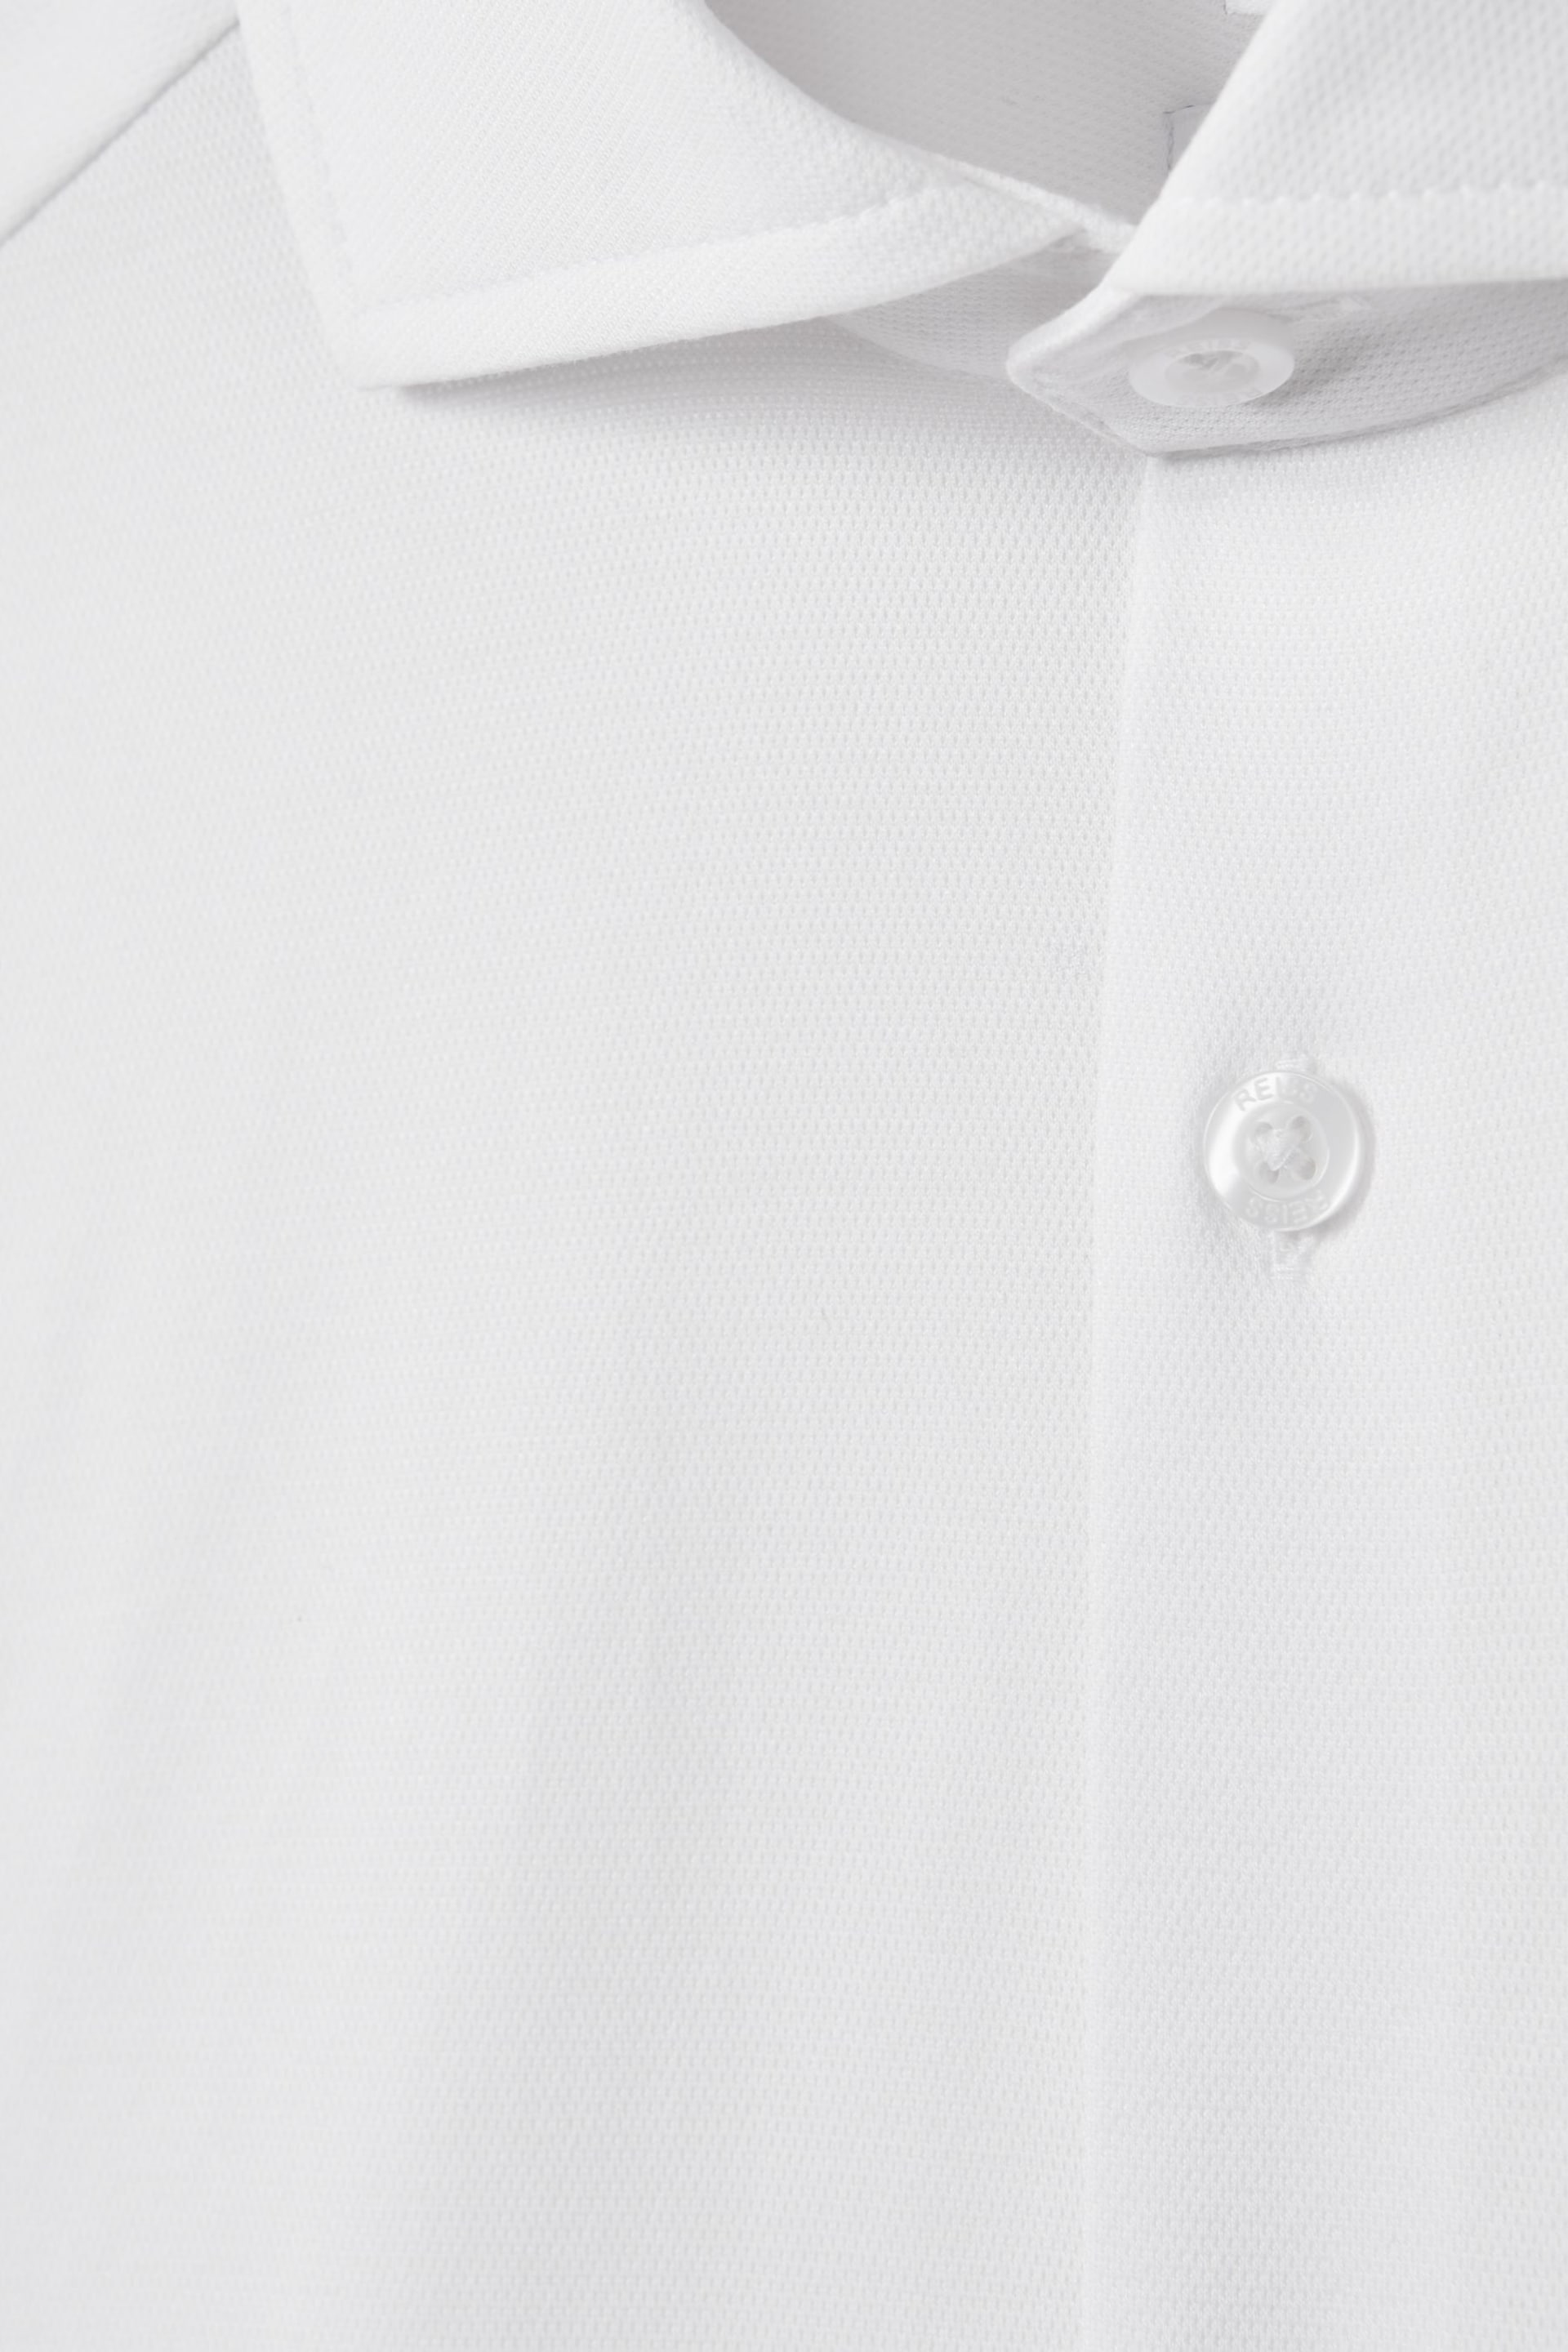 Reiss White Nate Cutaway Collar Jersey Slim Fit Shirt - Image 6 of 6